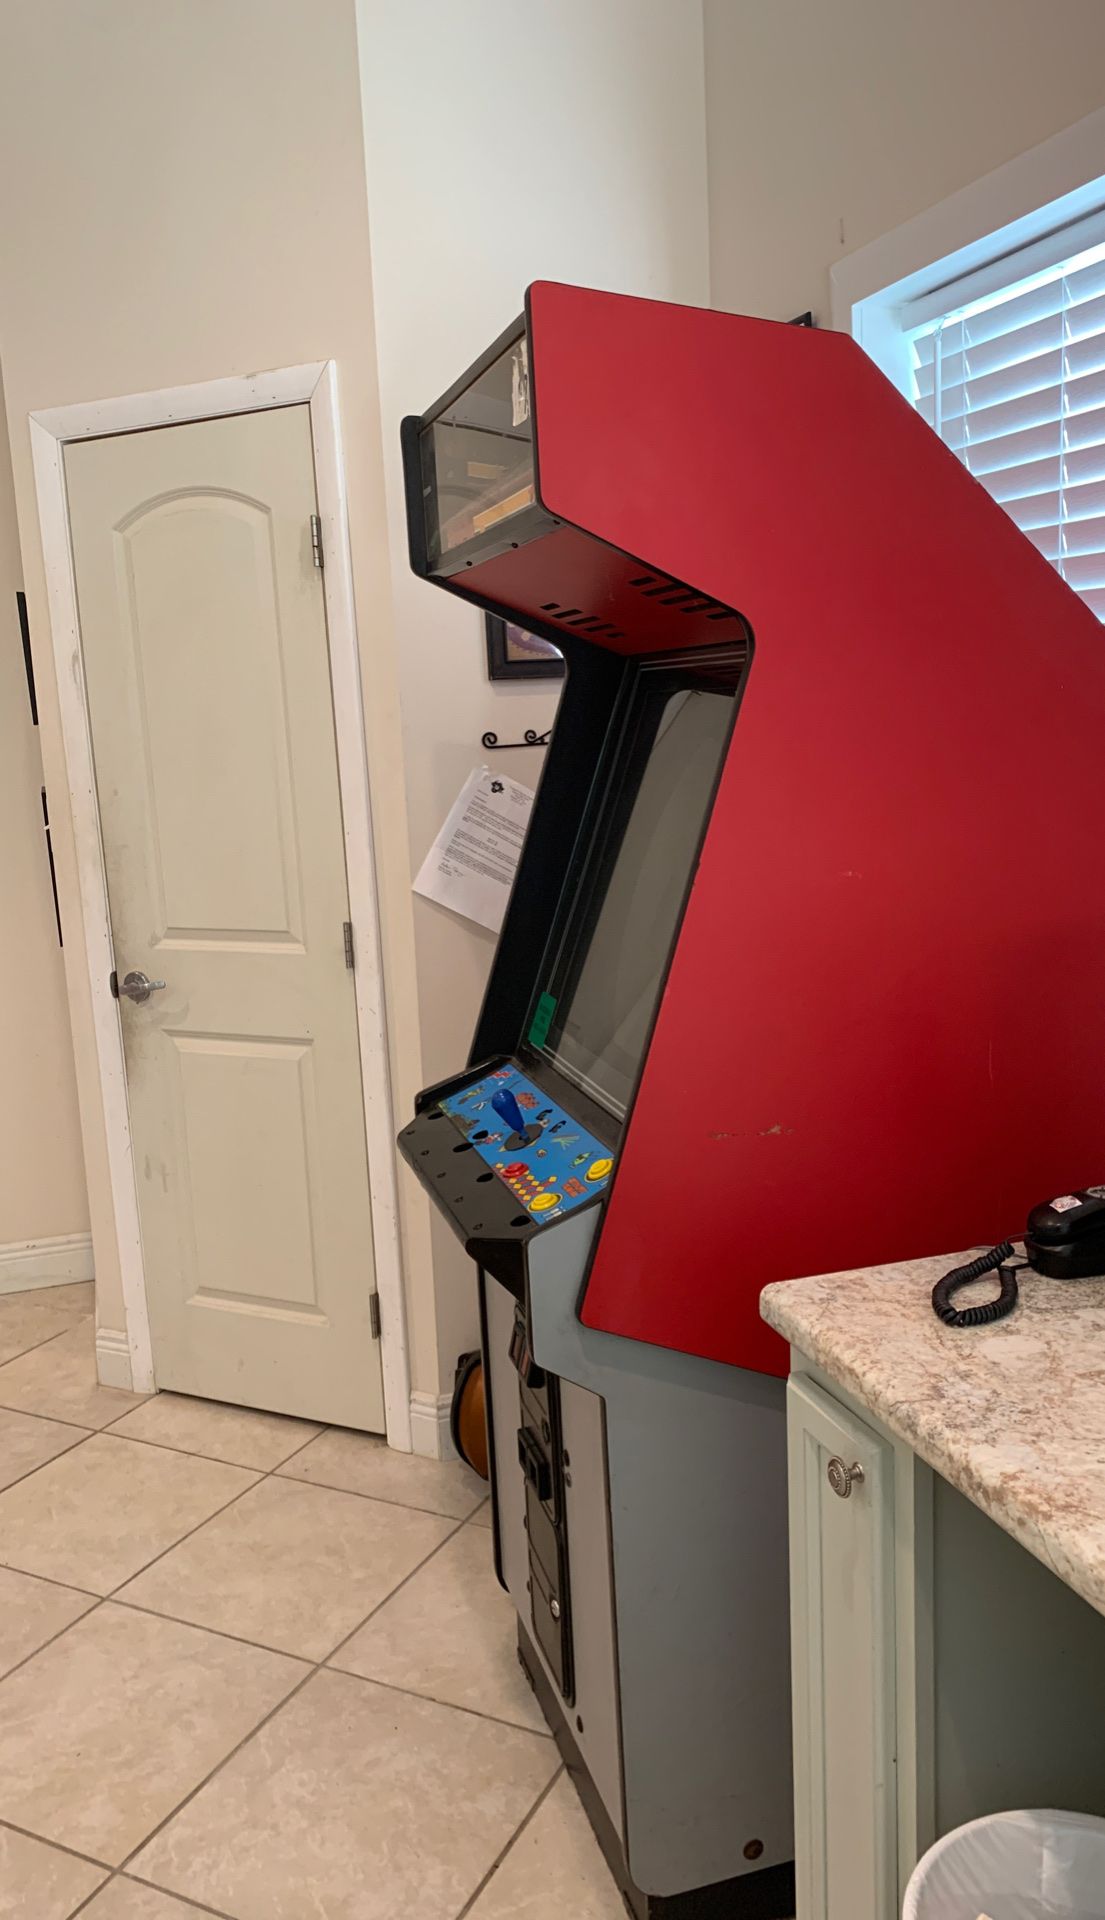 Multicade full size arcade machine